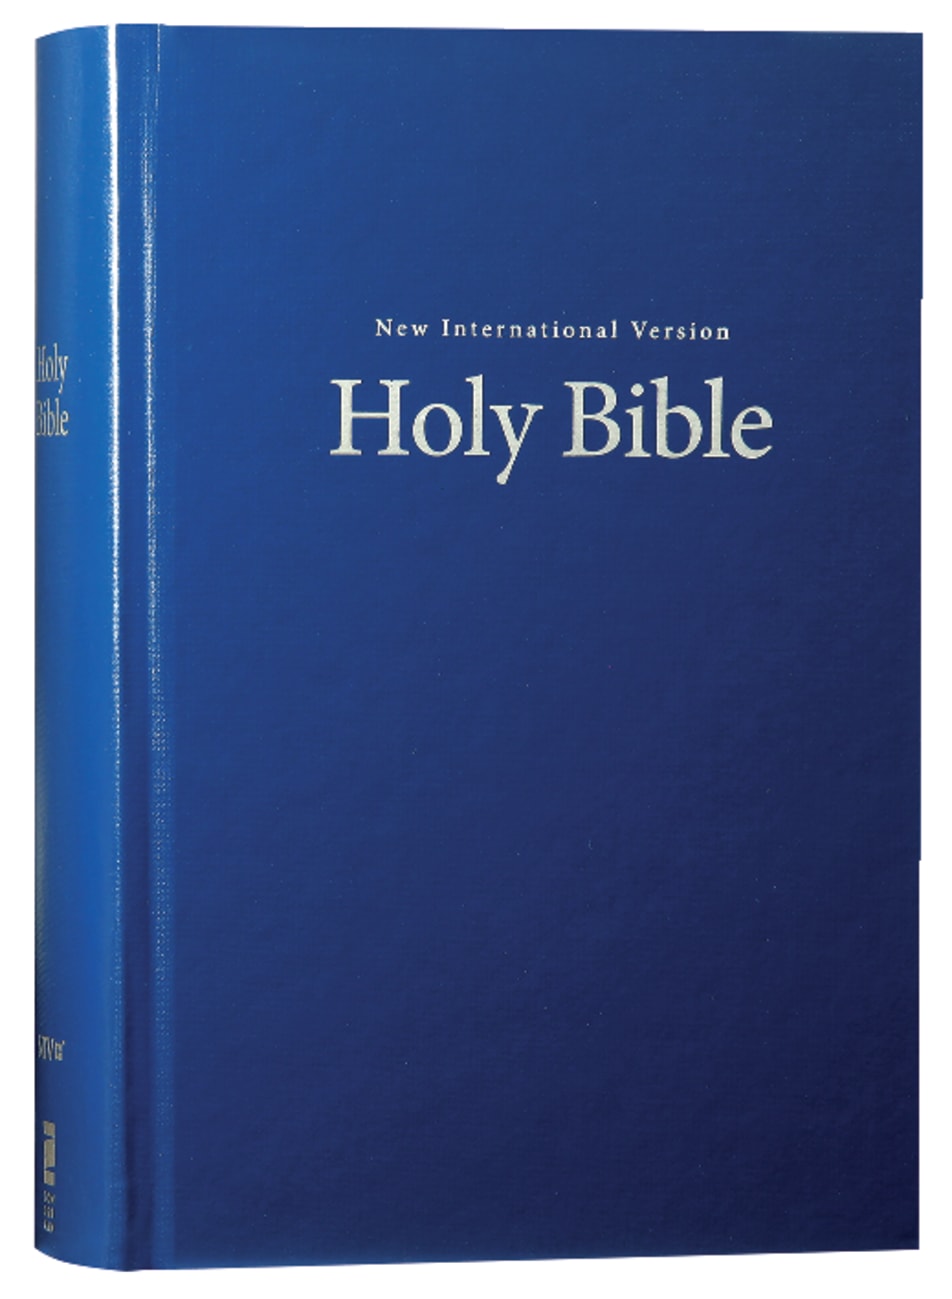 NIV Single-Column Pew and Worship Bible Large Print Blue (Black Letter Edition) Hardback